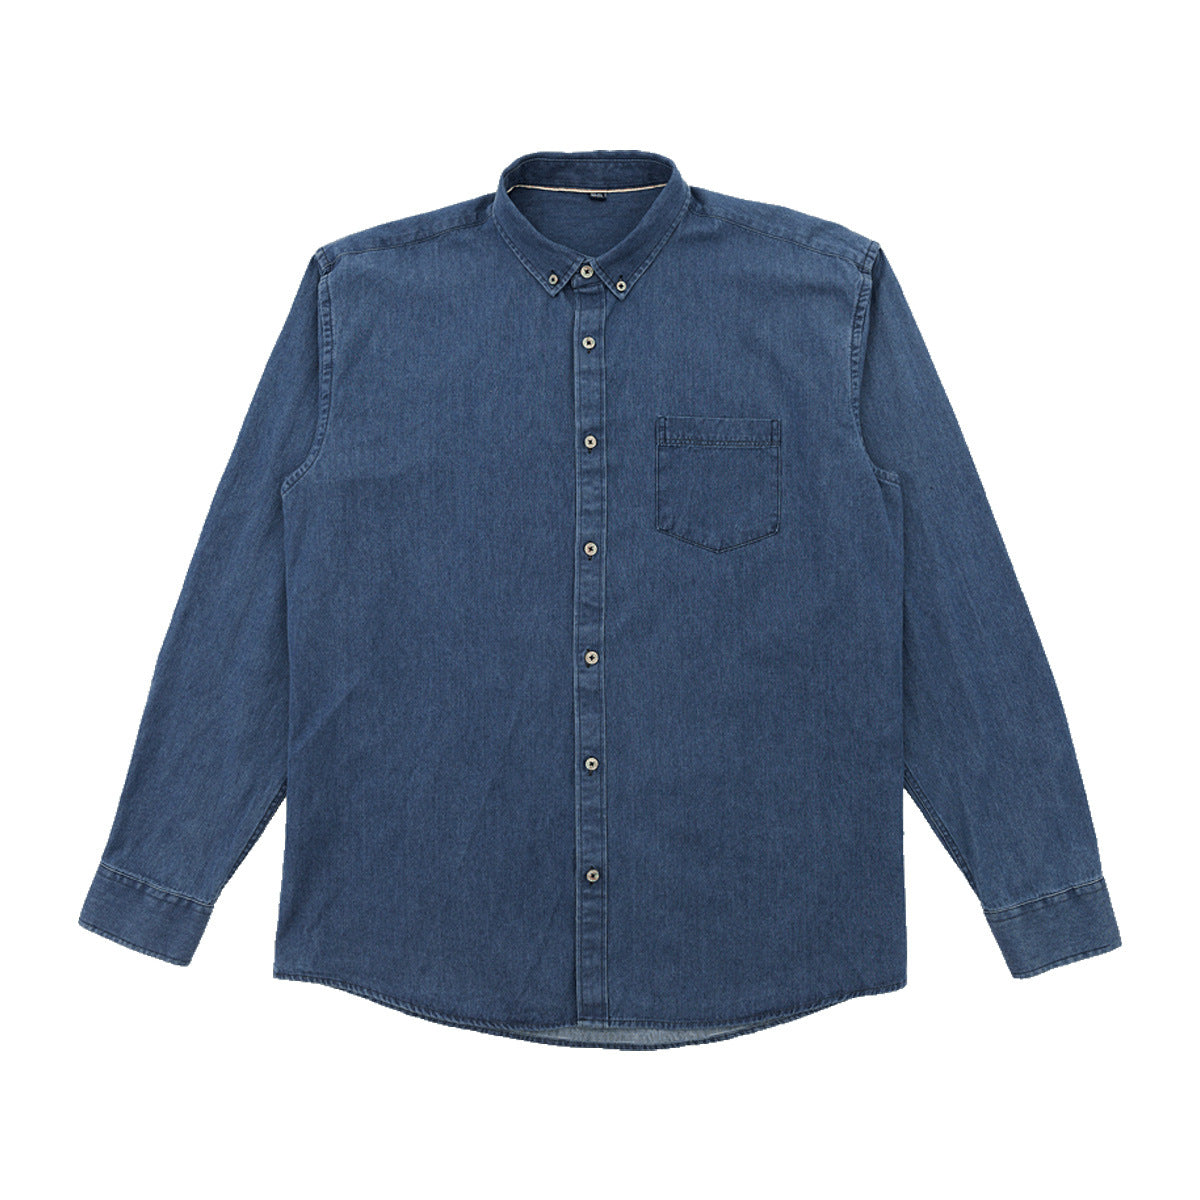 Men's Denim Long-sleeved Shirt Trendy Casual Solid Color Work Clothes Shirt Coat